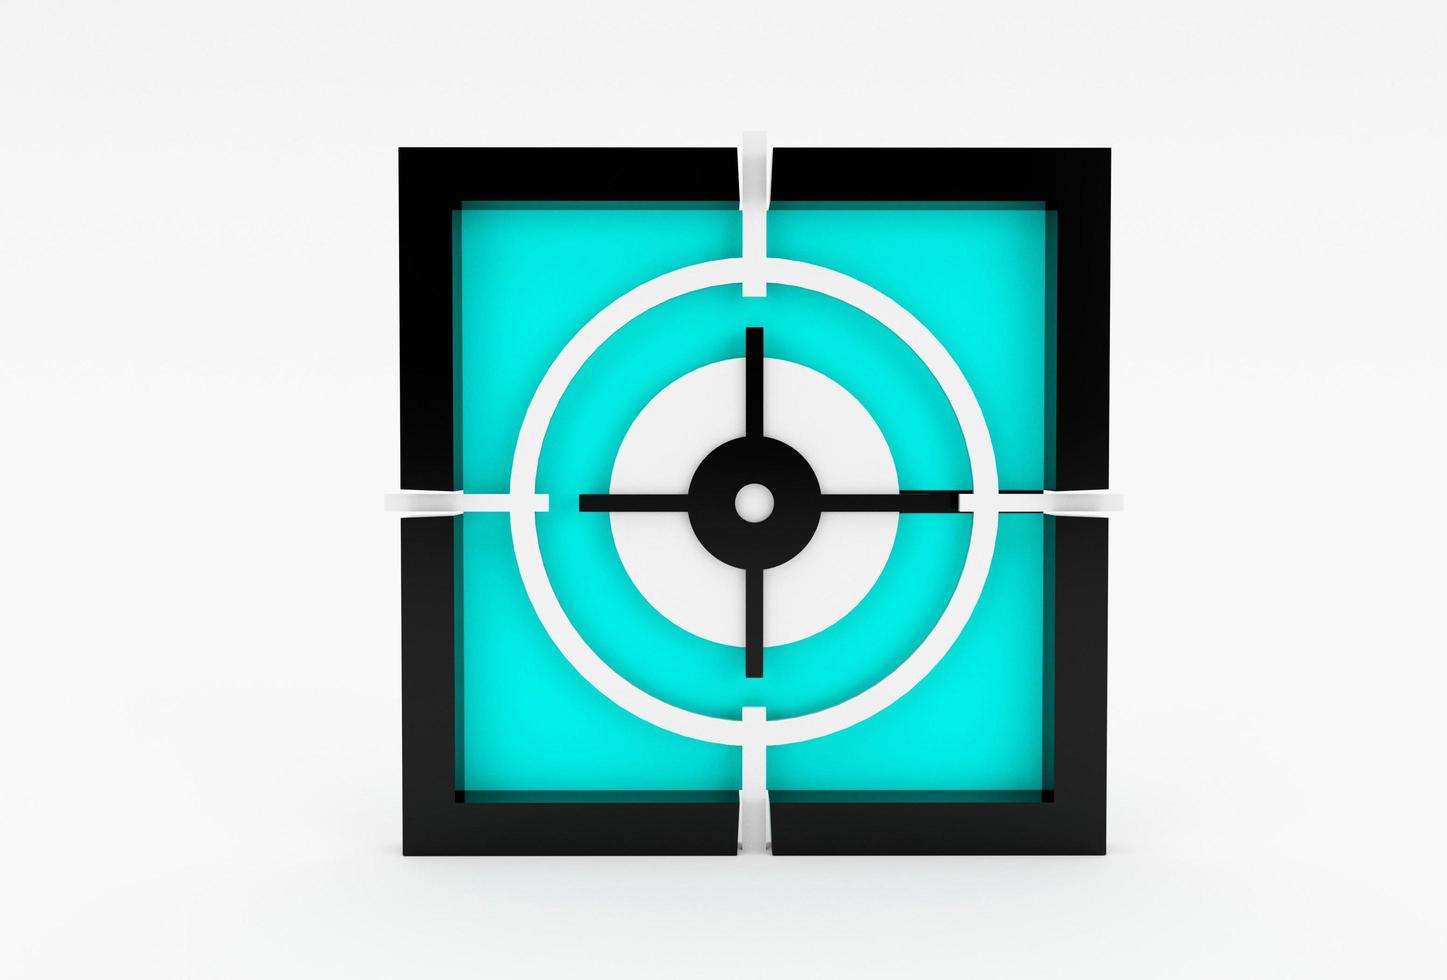 crosshair target icon 3d illustration minimal rendering on white background. photo